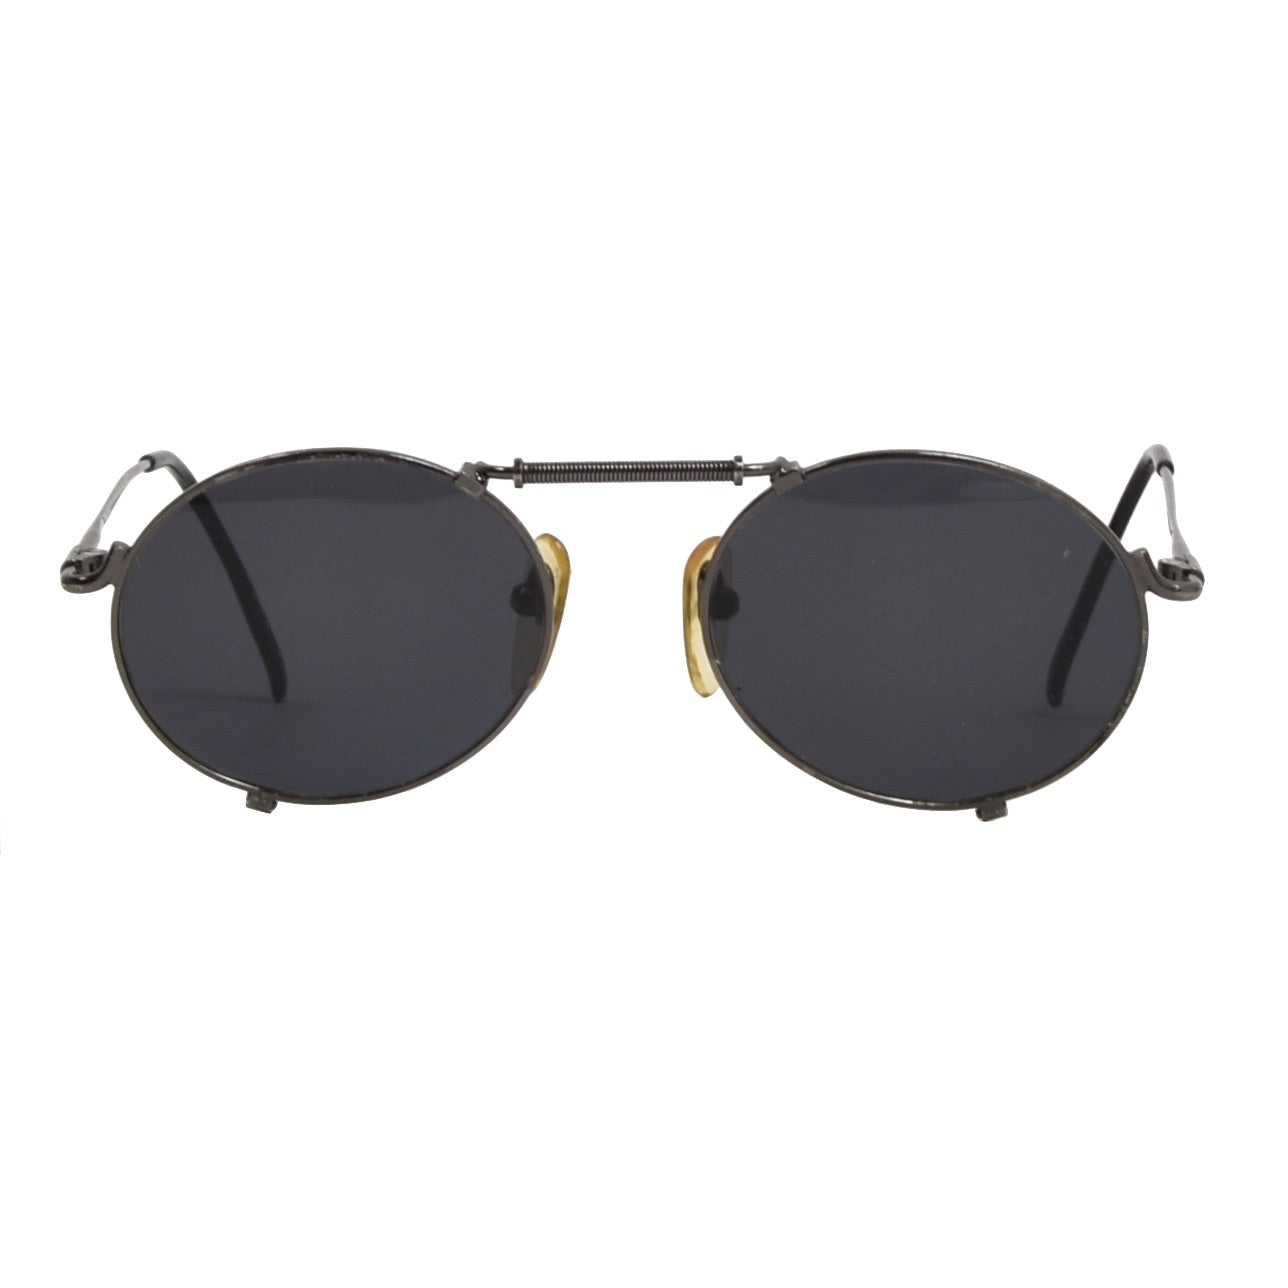 Jean Paul Gaultier 56-7162 Sunglasses - Gunmetal Grey